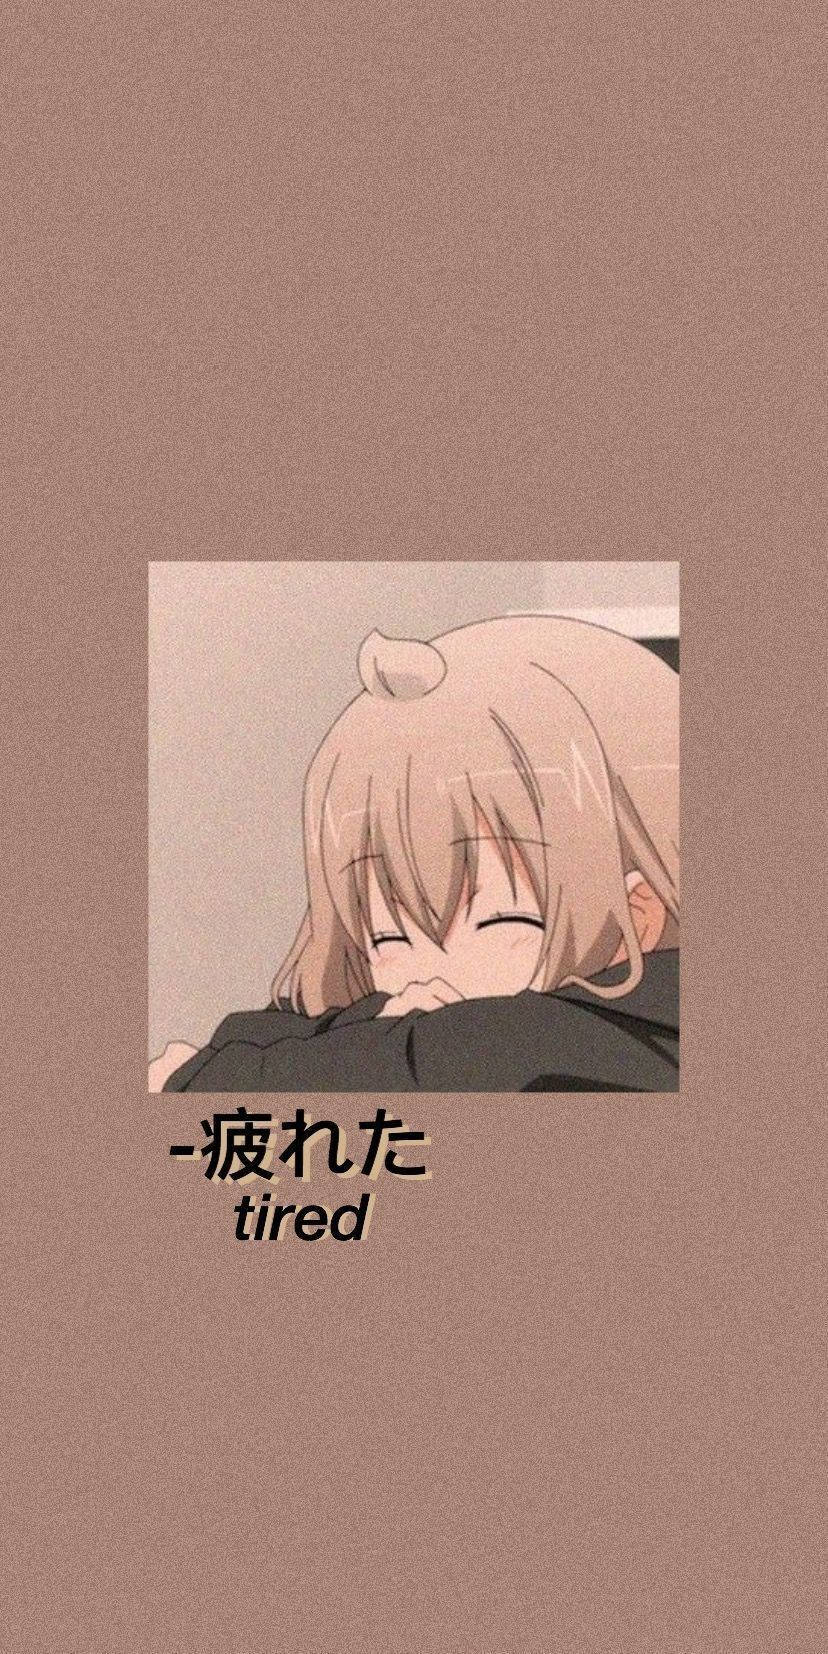 Lethargic Anime Girl Napping Wallpaper